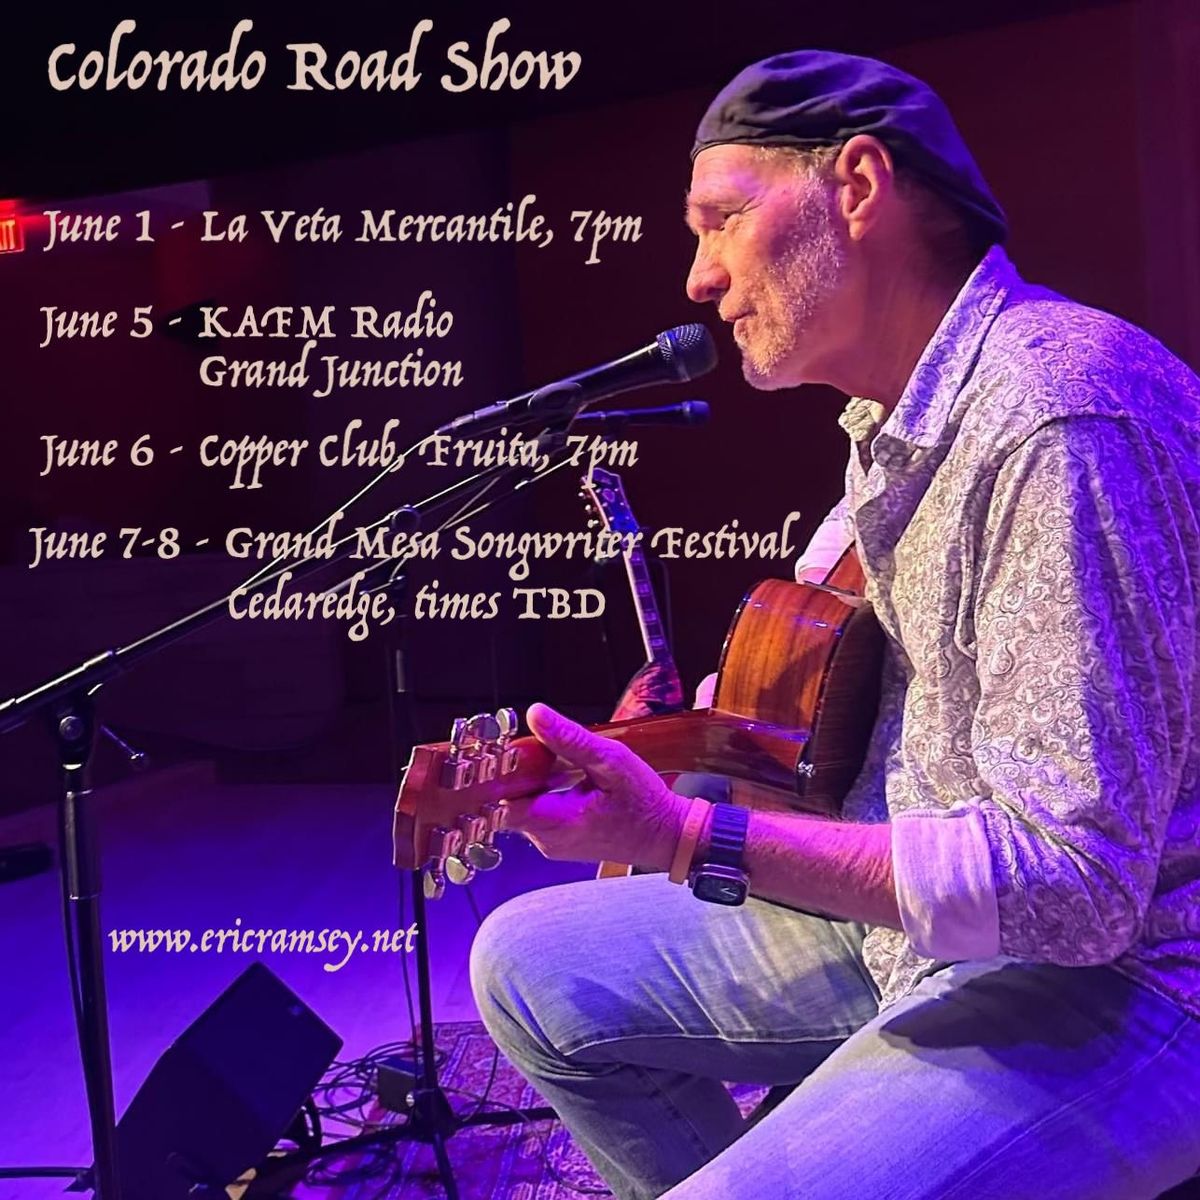 Colorado Road Show - KAFM Radio Grand Junction